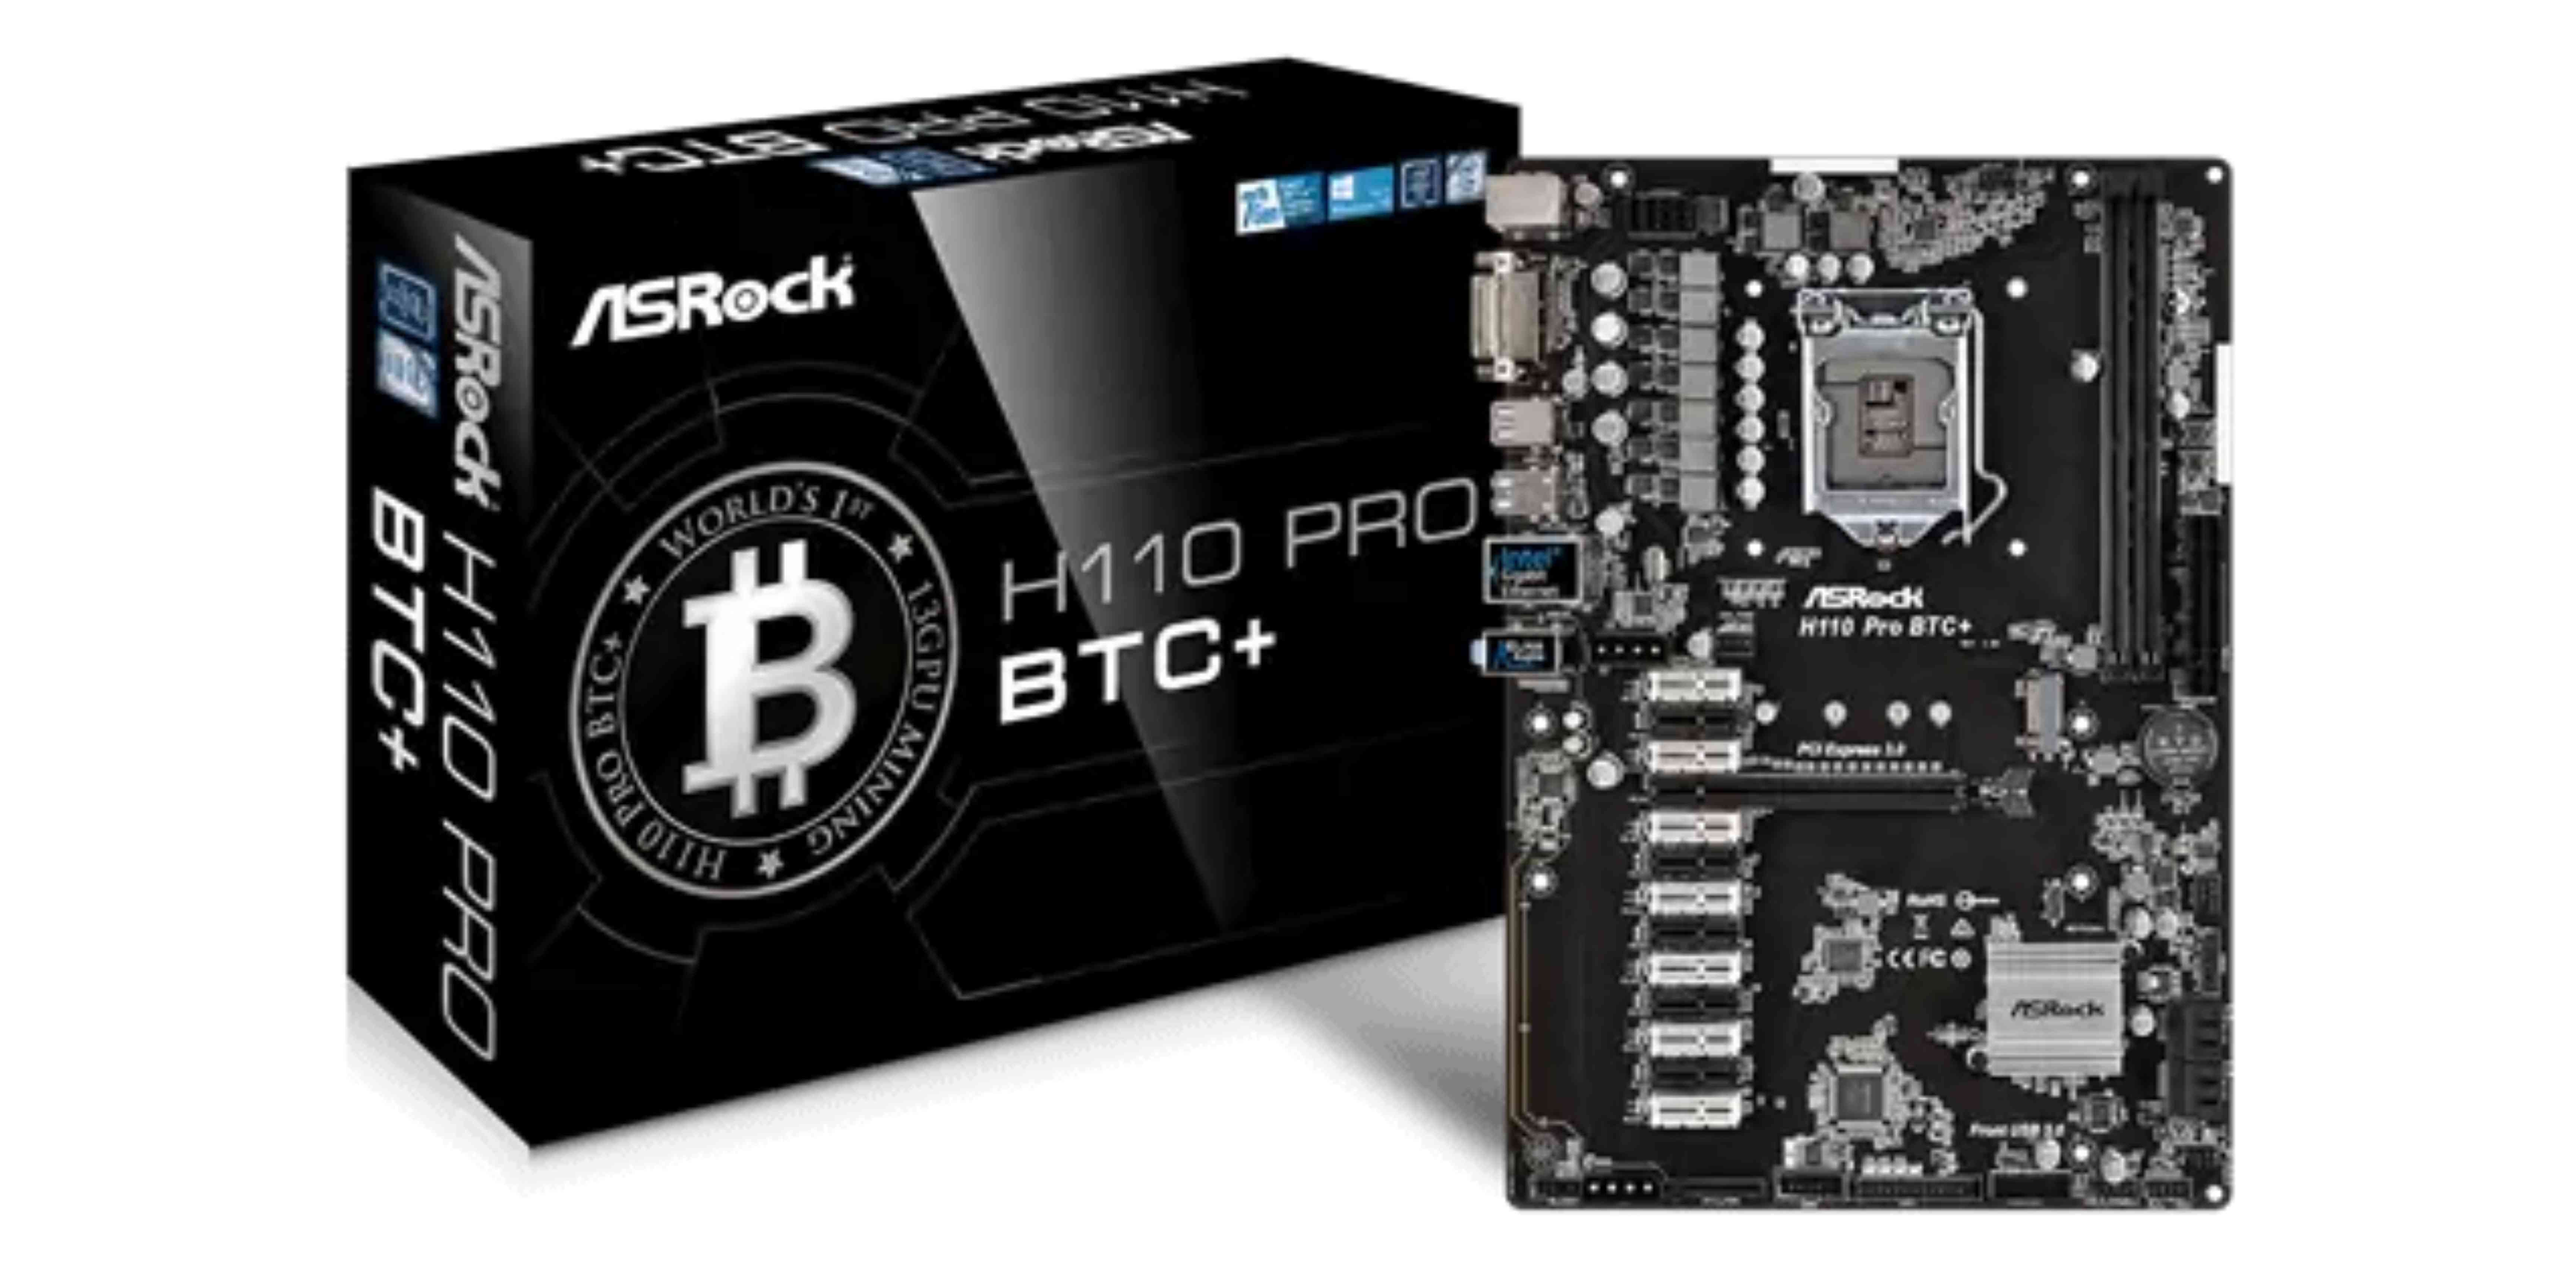 ASRock H110 Pro BTC+ with box